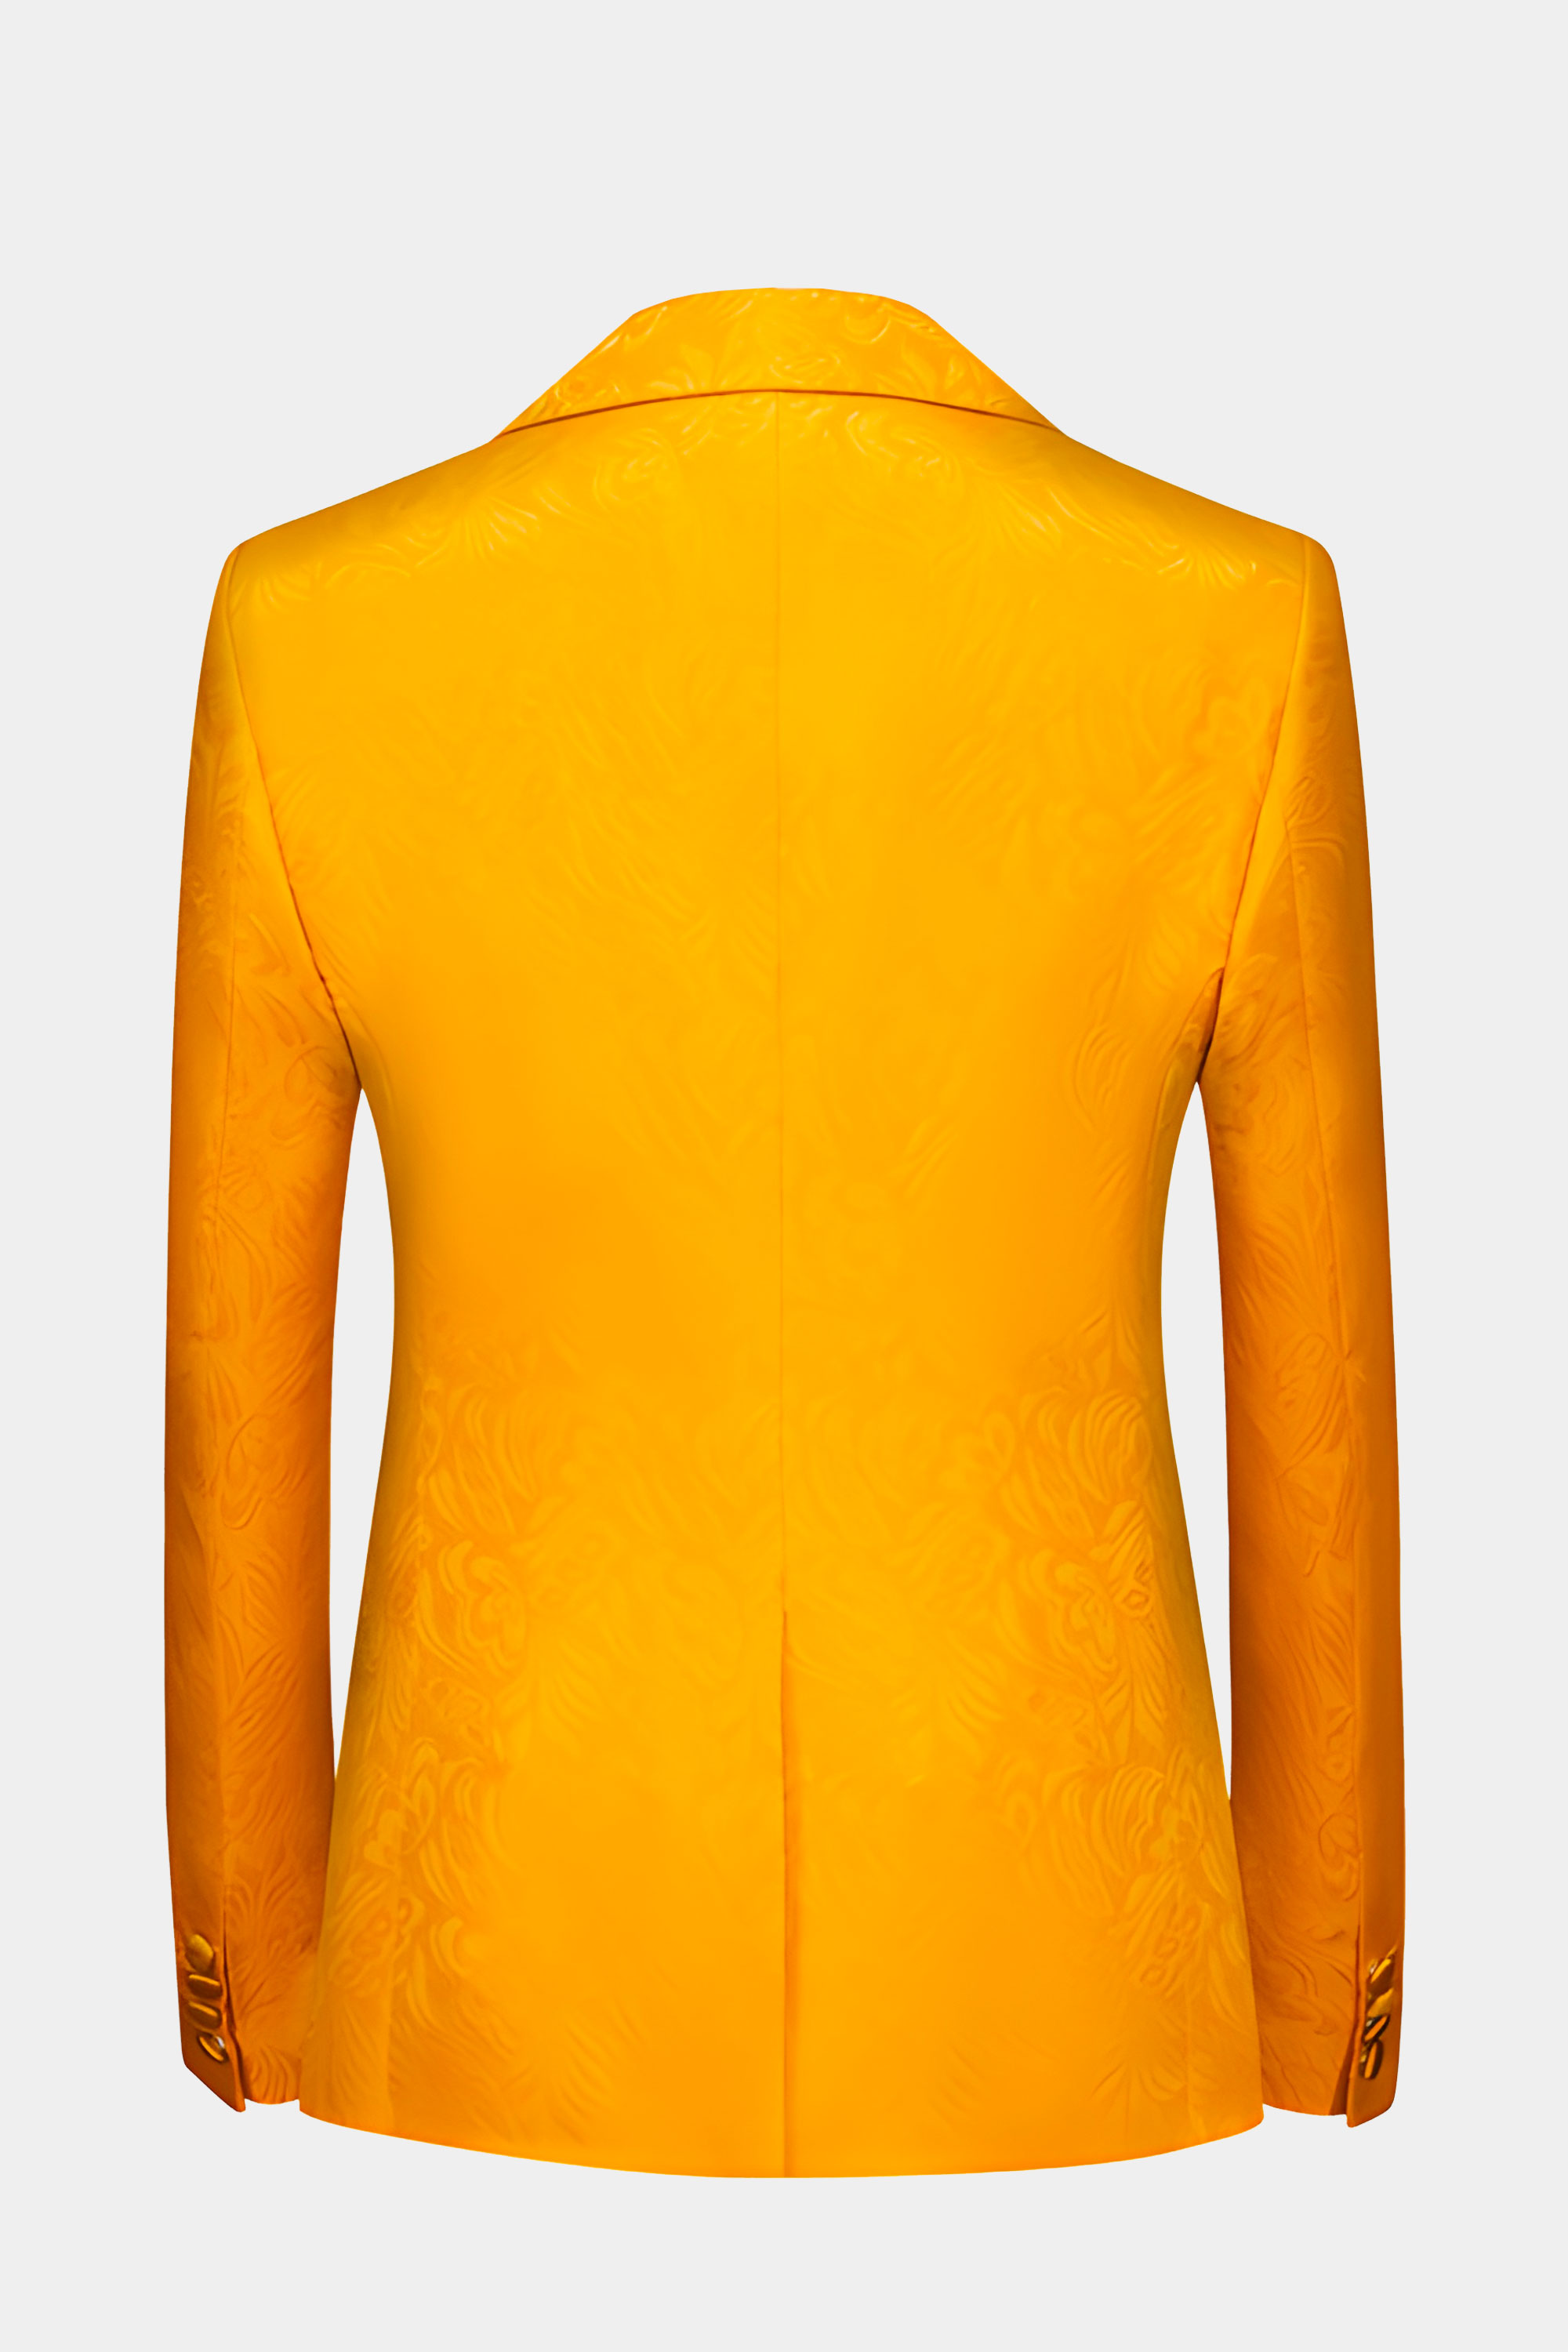 Orange-Gold-Floral-Tuxedo-Jacket-from-Gentlemansguru.com